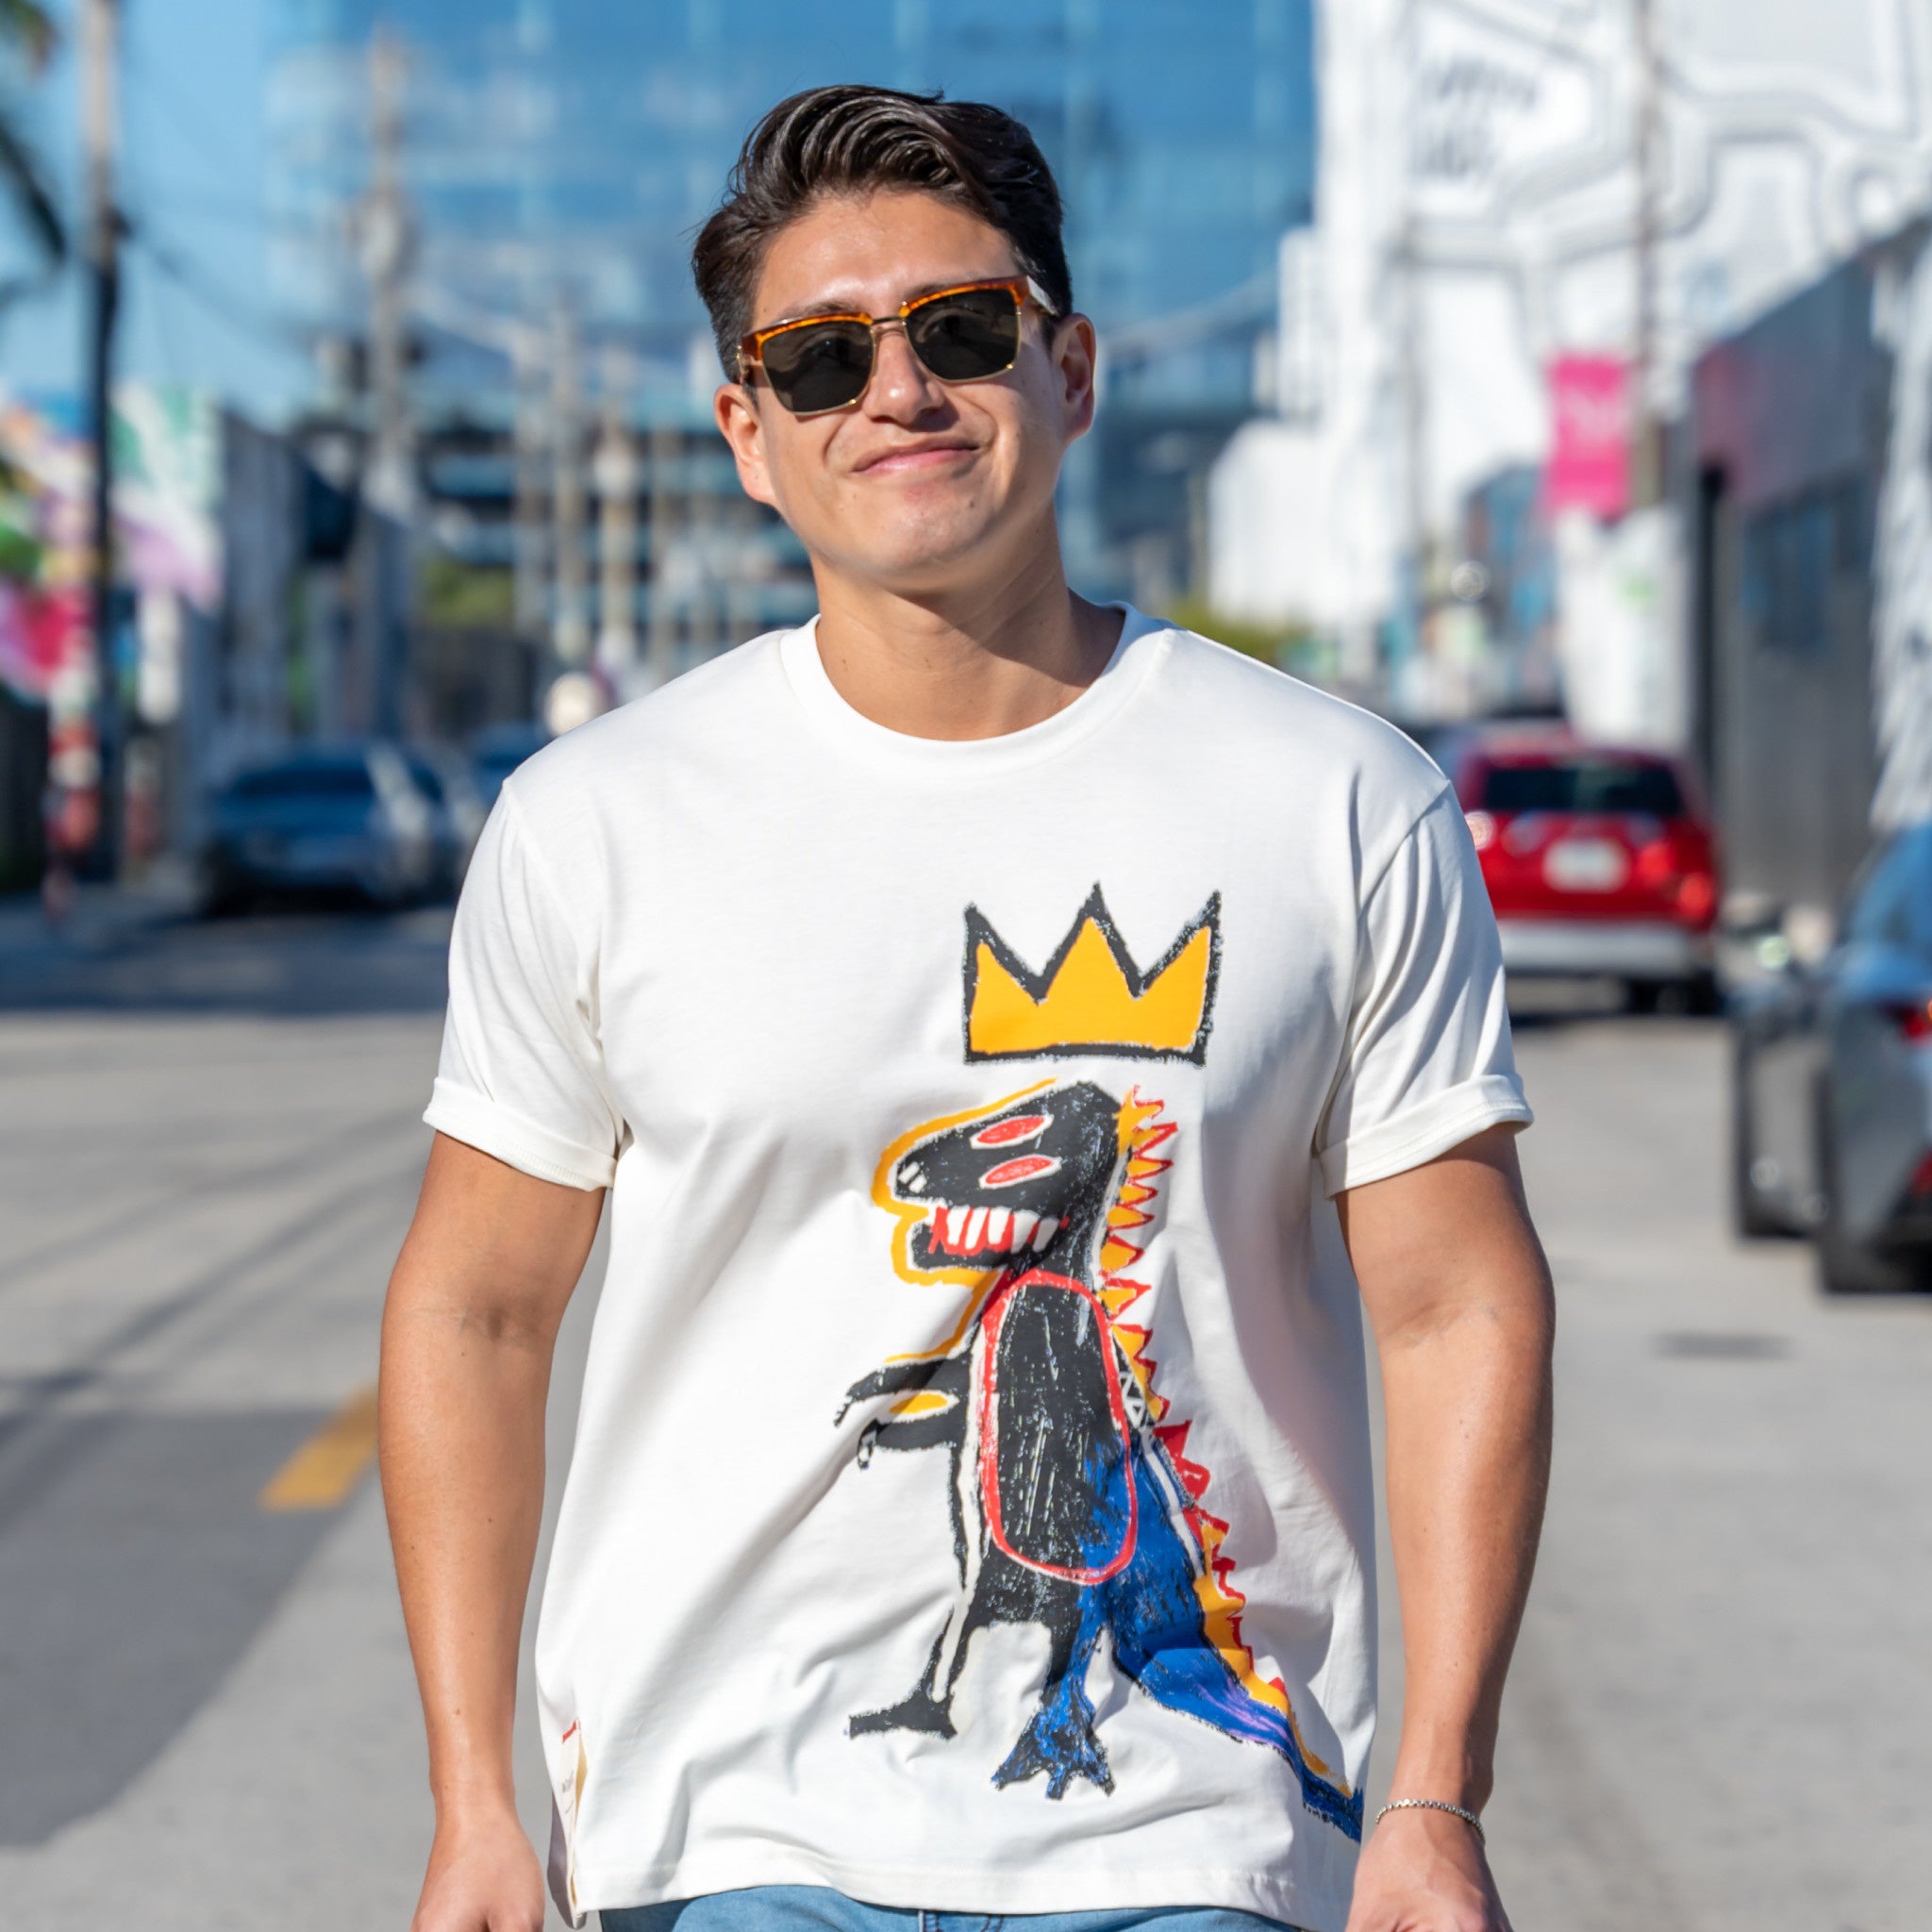 Basquiat PEZ DISPENSER T-Shirt Sand - Wynwood Walls Shop